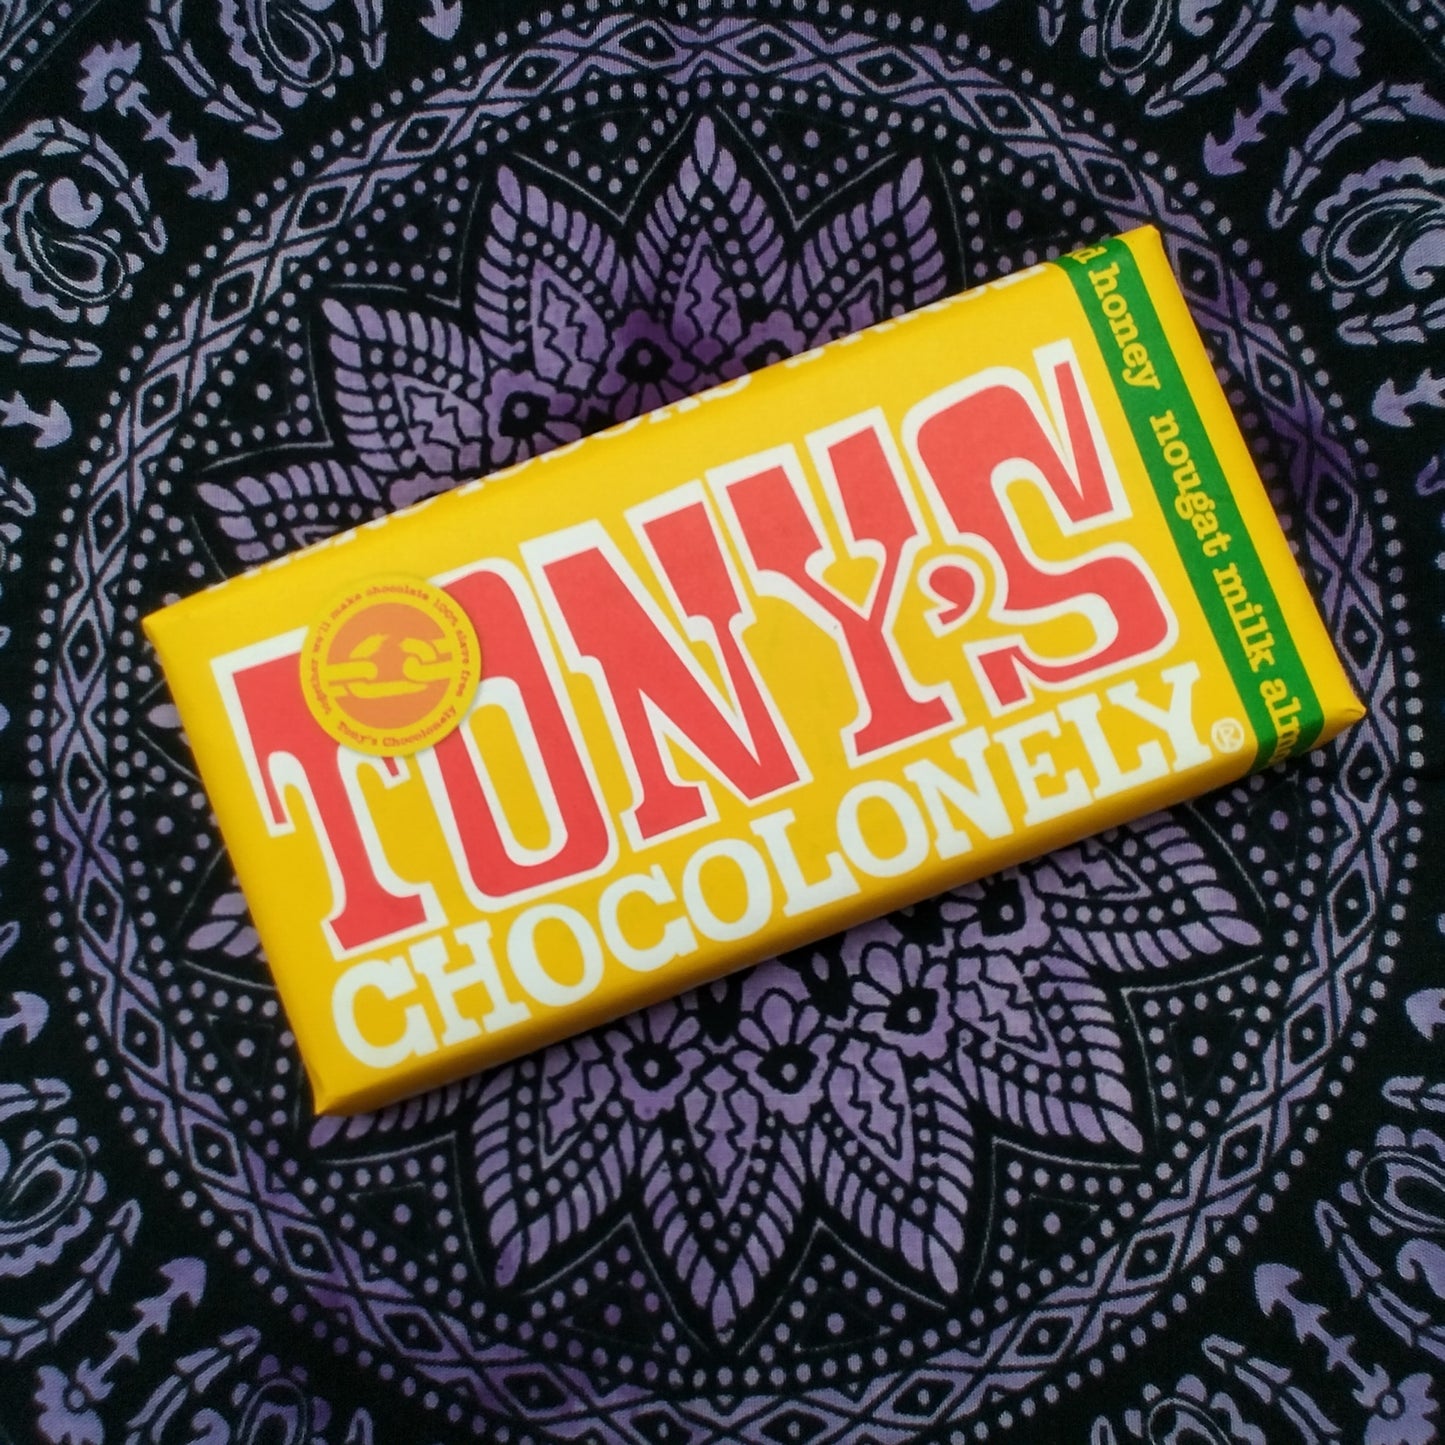 Tony's Chocolonely Milk Chocolate & Honey Nougat